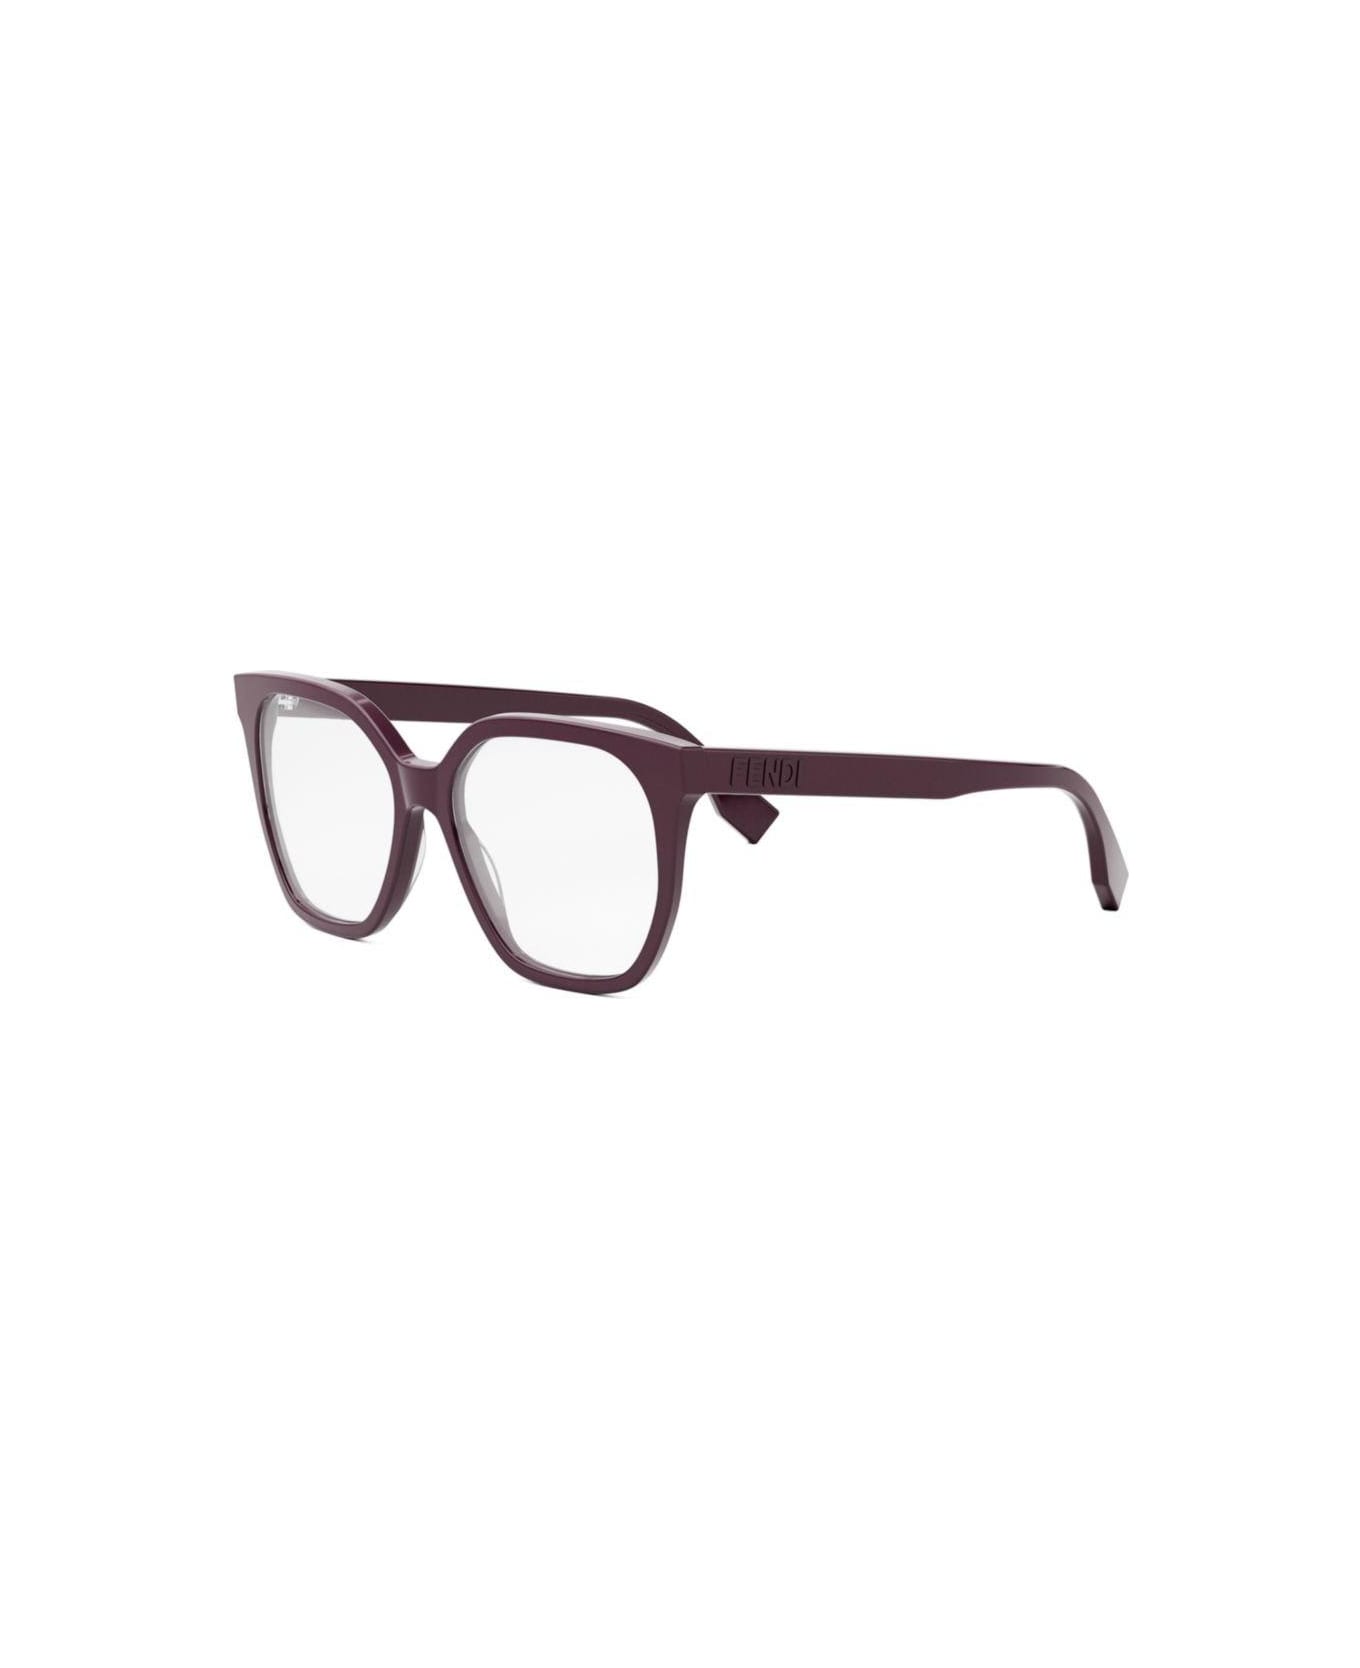 Fendi Eyewear Square Frame Glasses - 081